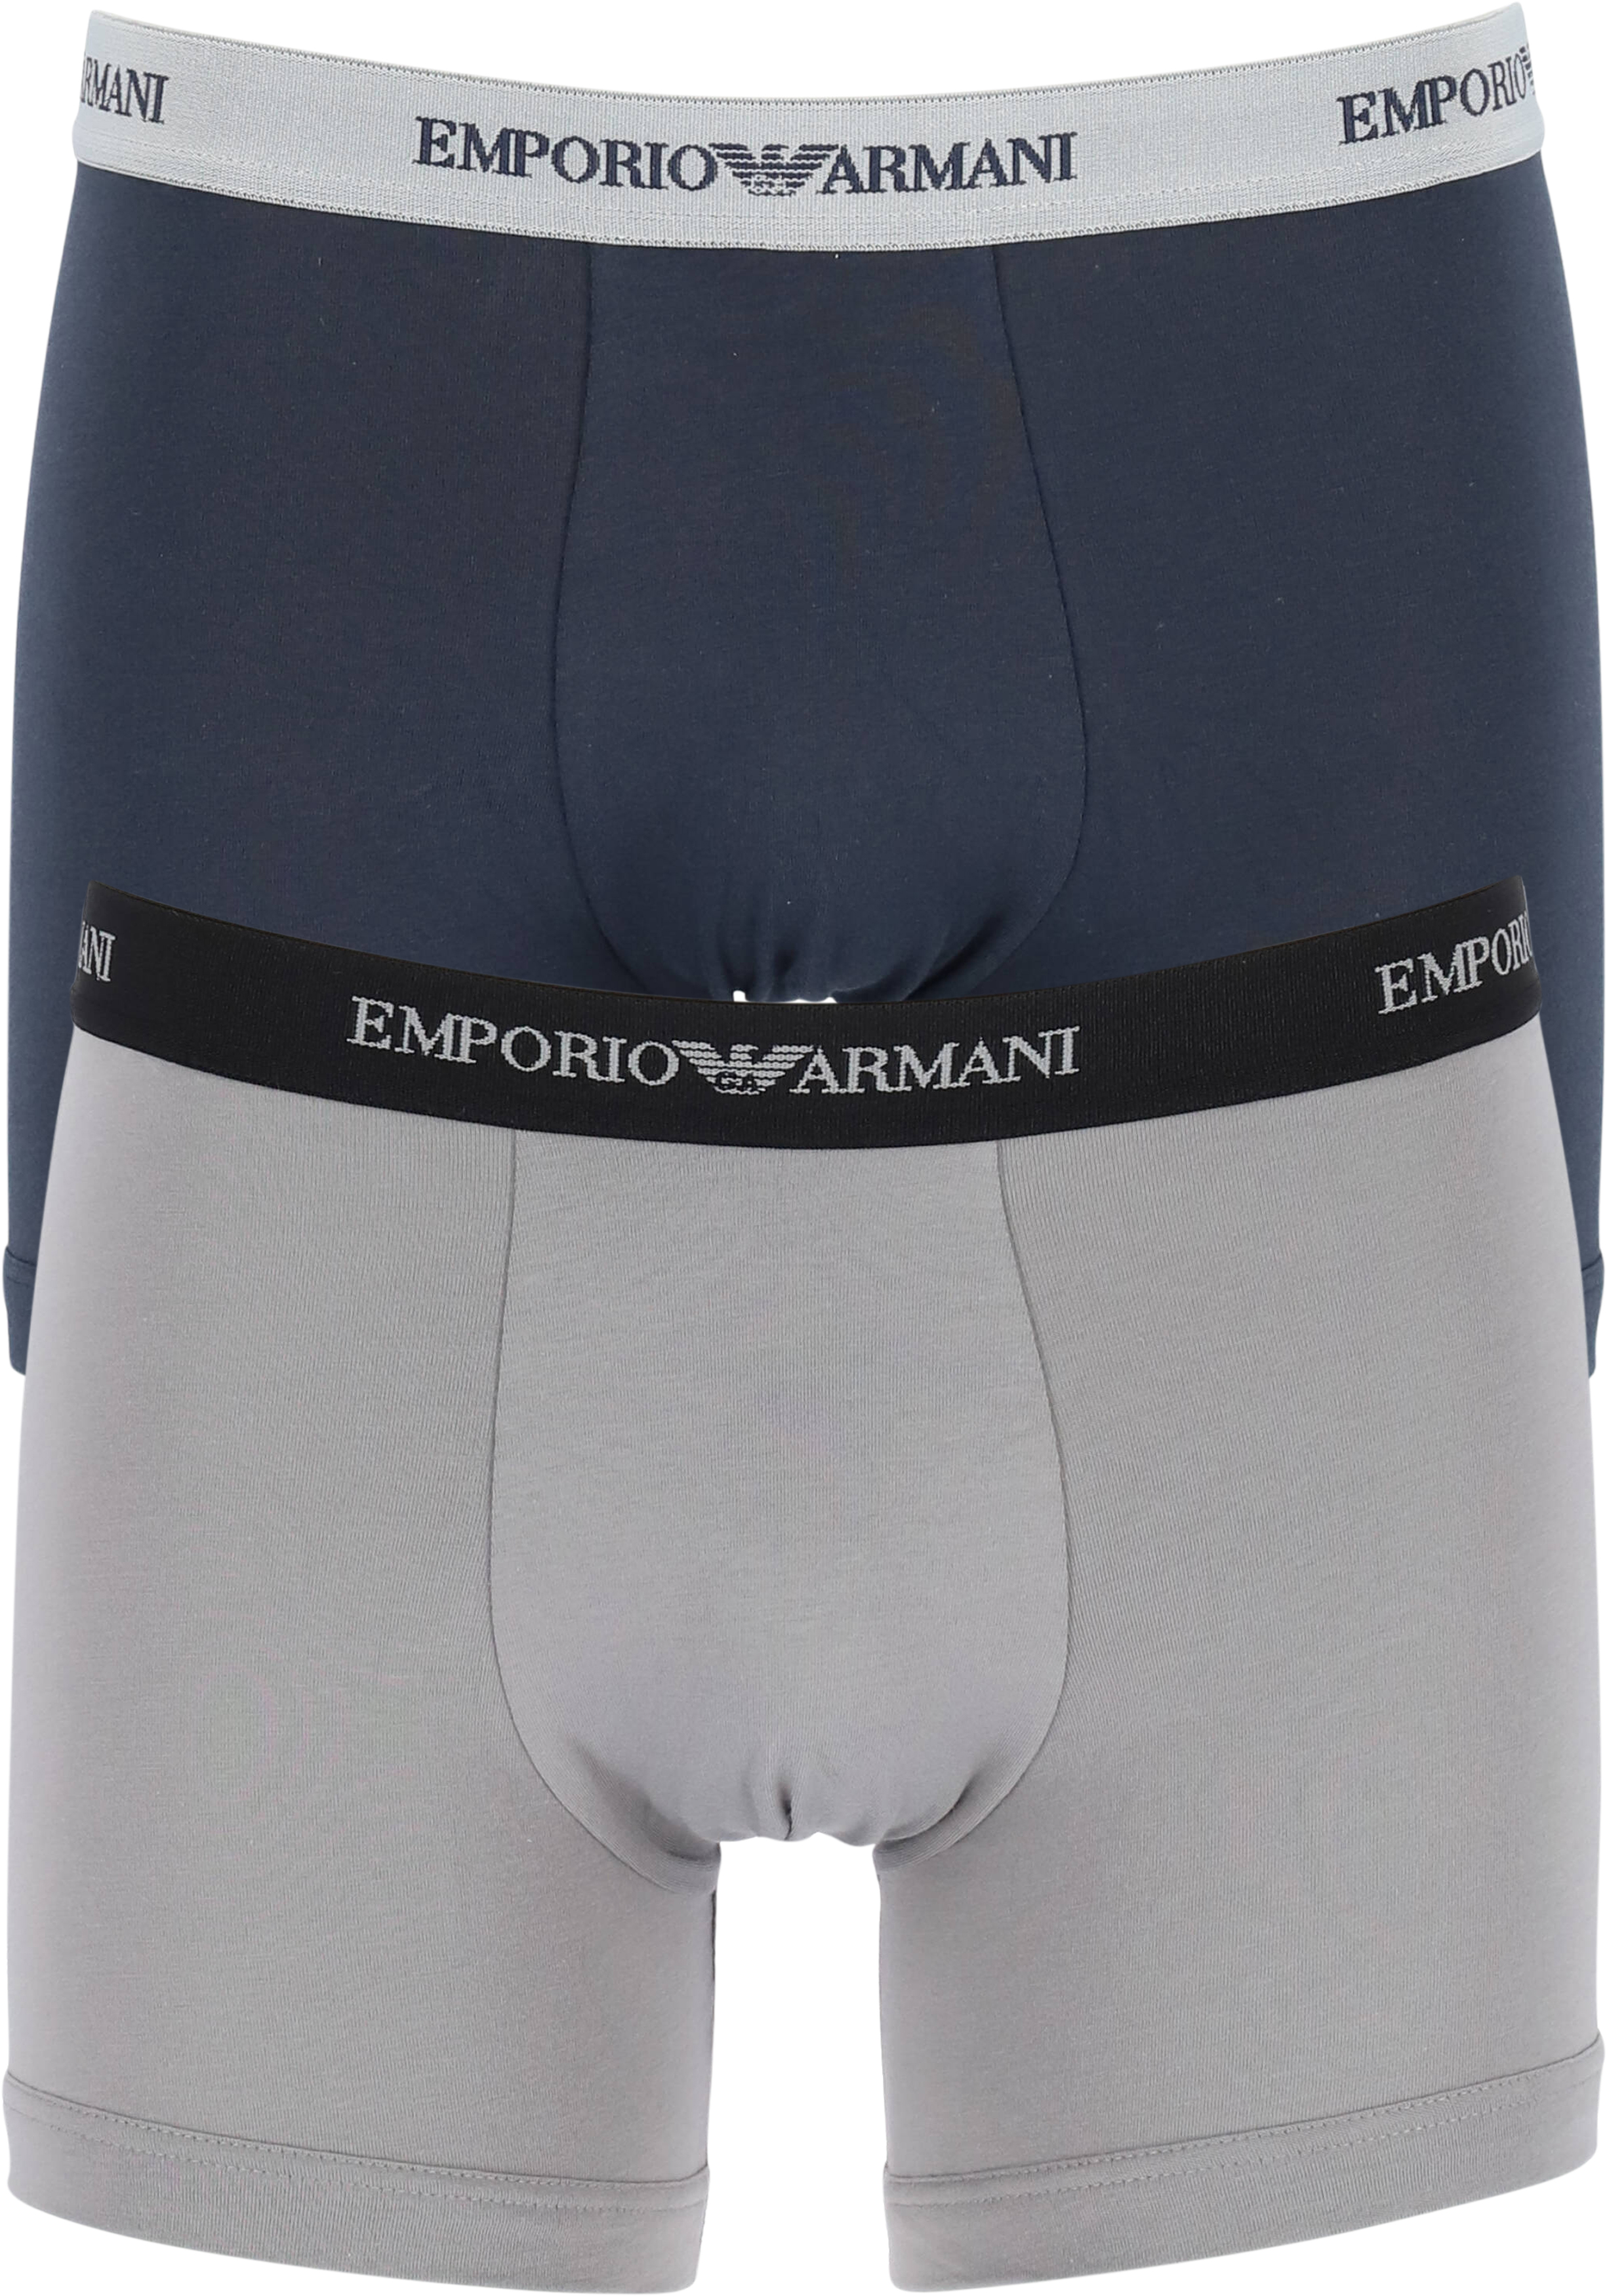 Emporio Armani Boxers Essential Core (2-pack), heren boxers normale lengte, blauw en grijs  